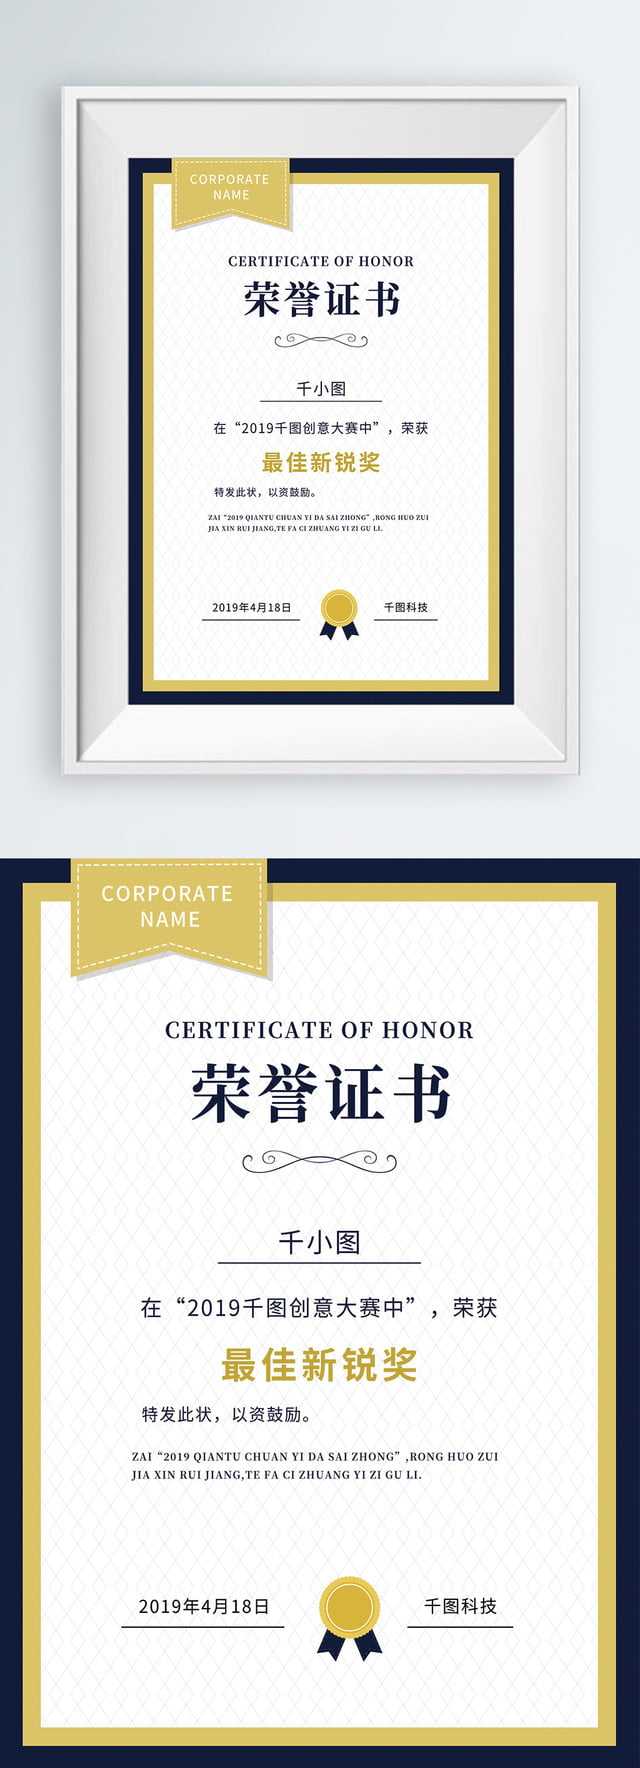 Certificate Authorization Certificate Certificate Of Honor For Certificate Of Authorization Template